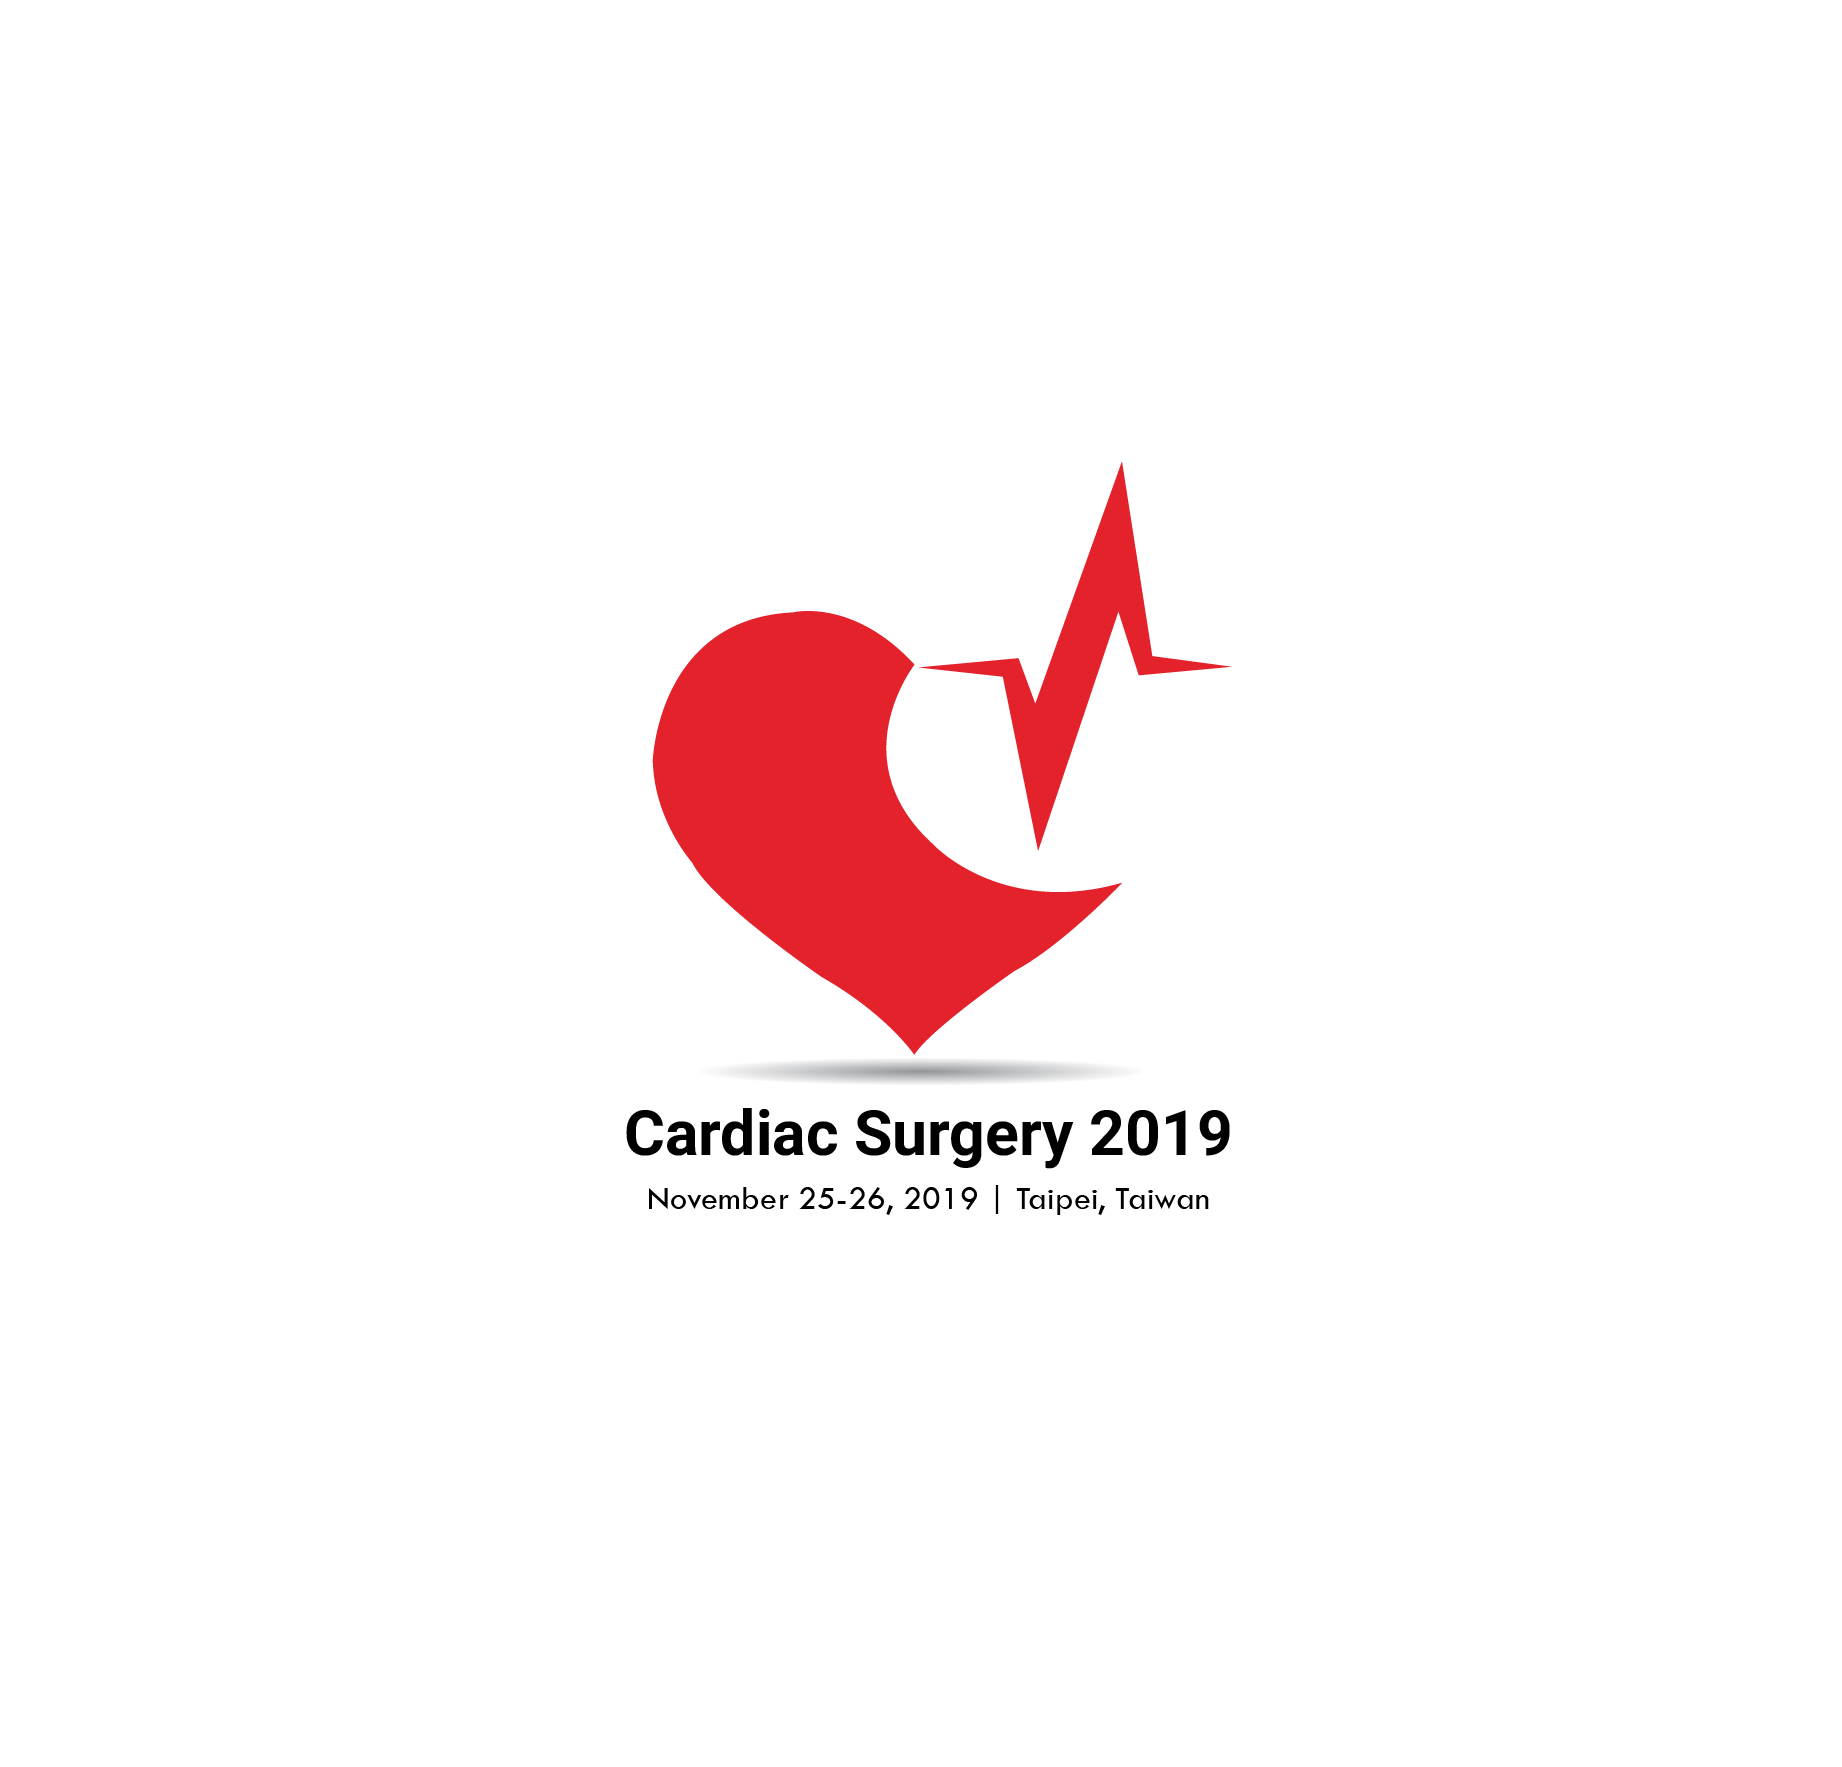 6th Annual Congress on Cardiology and Cardiac Surgery